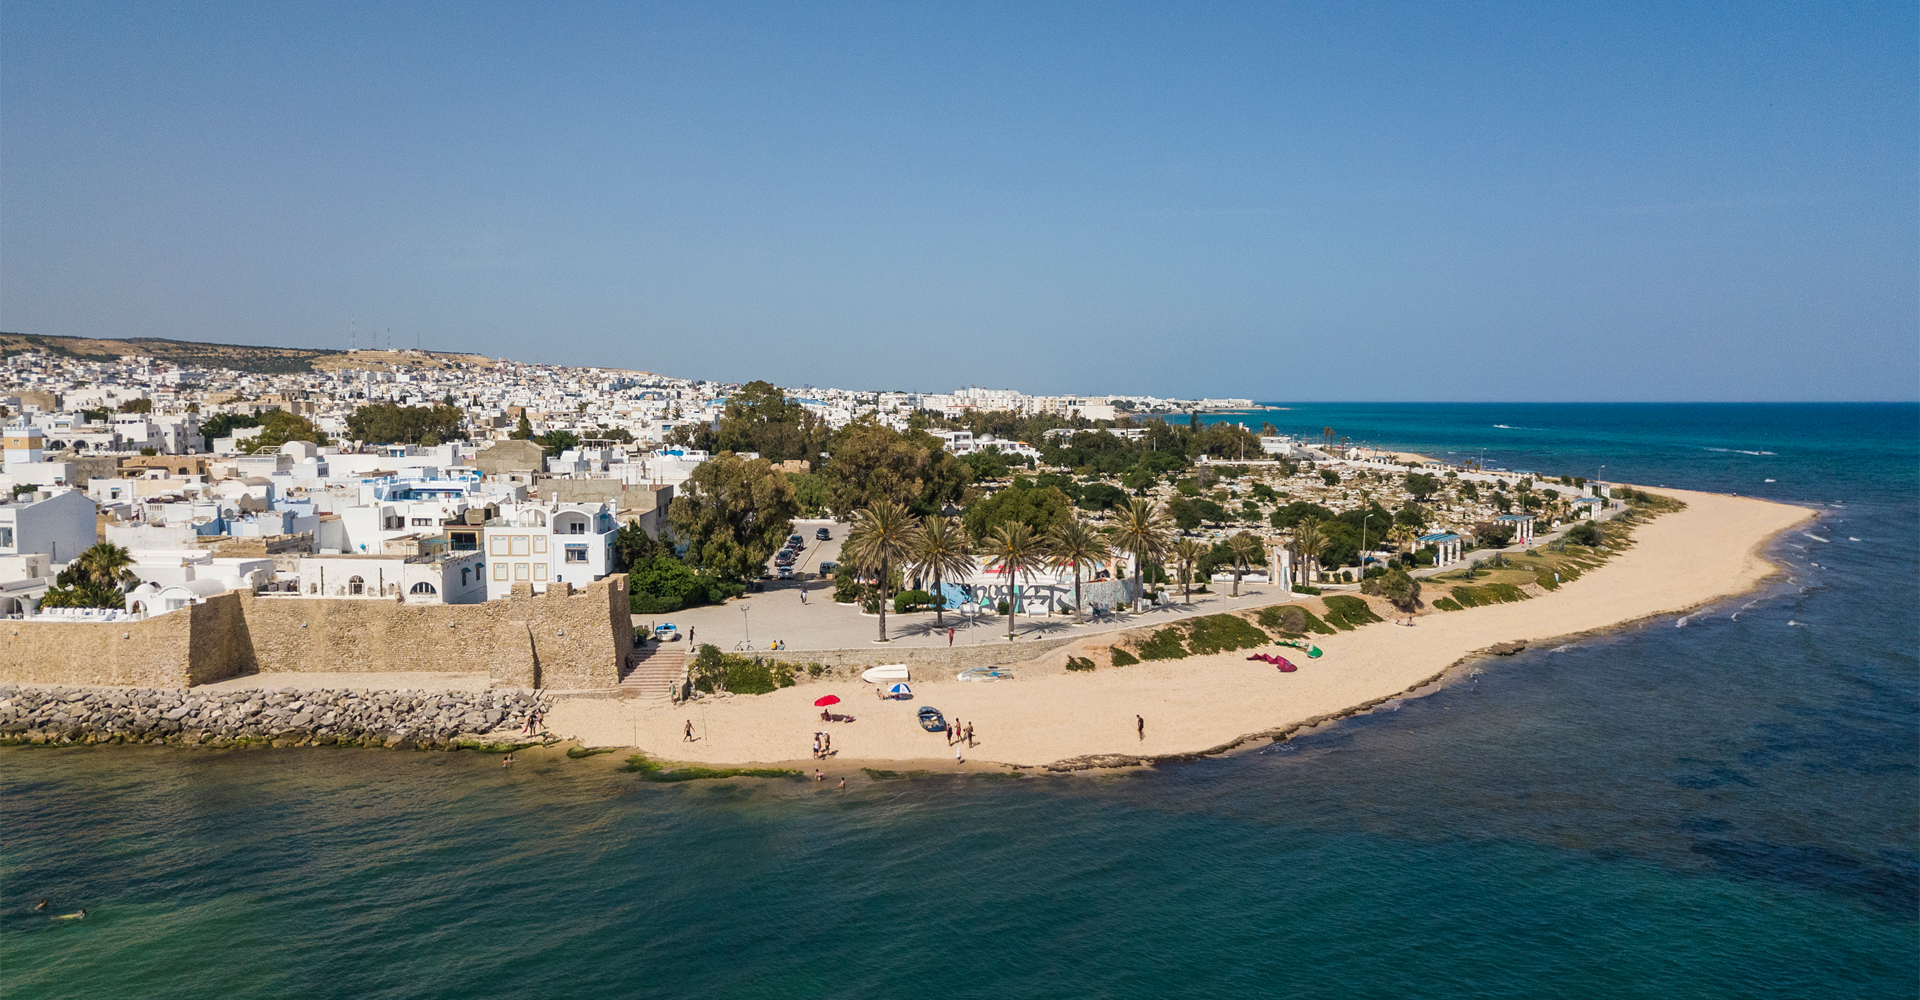 What Makes Tunisia Holiday A Successful Tourist Destination?